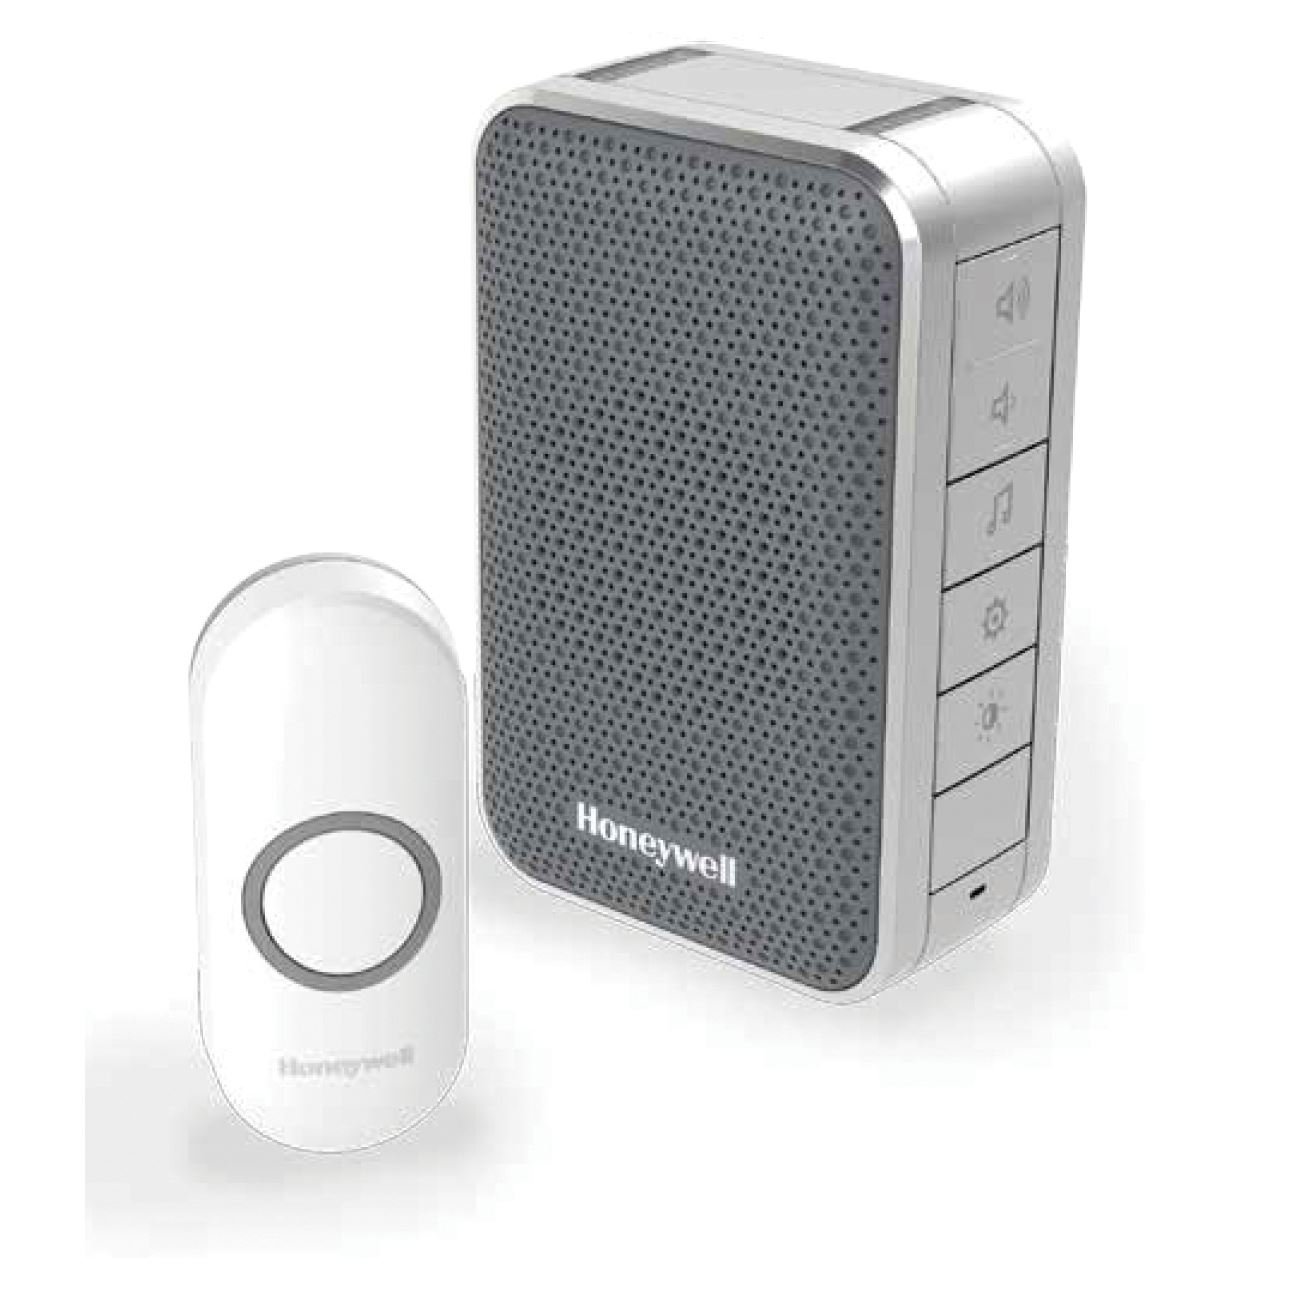 Honeywell Wireless Series 3 Portable Doorbell with Volume Control